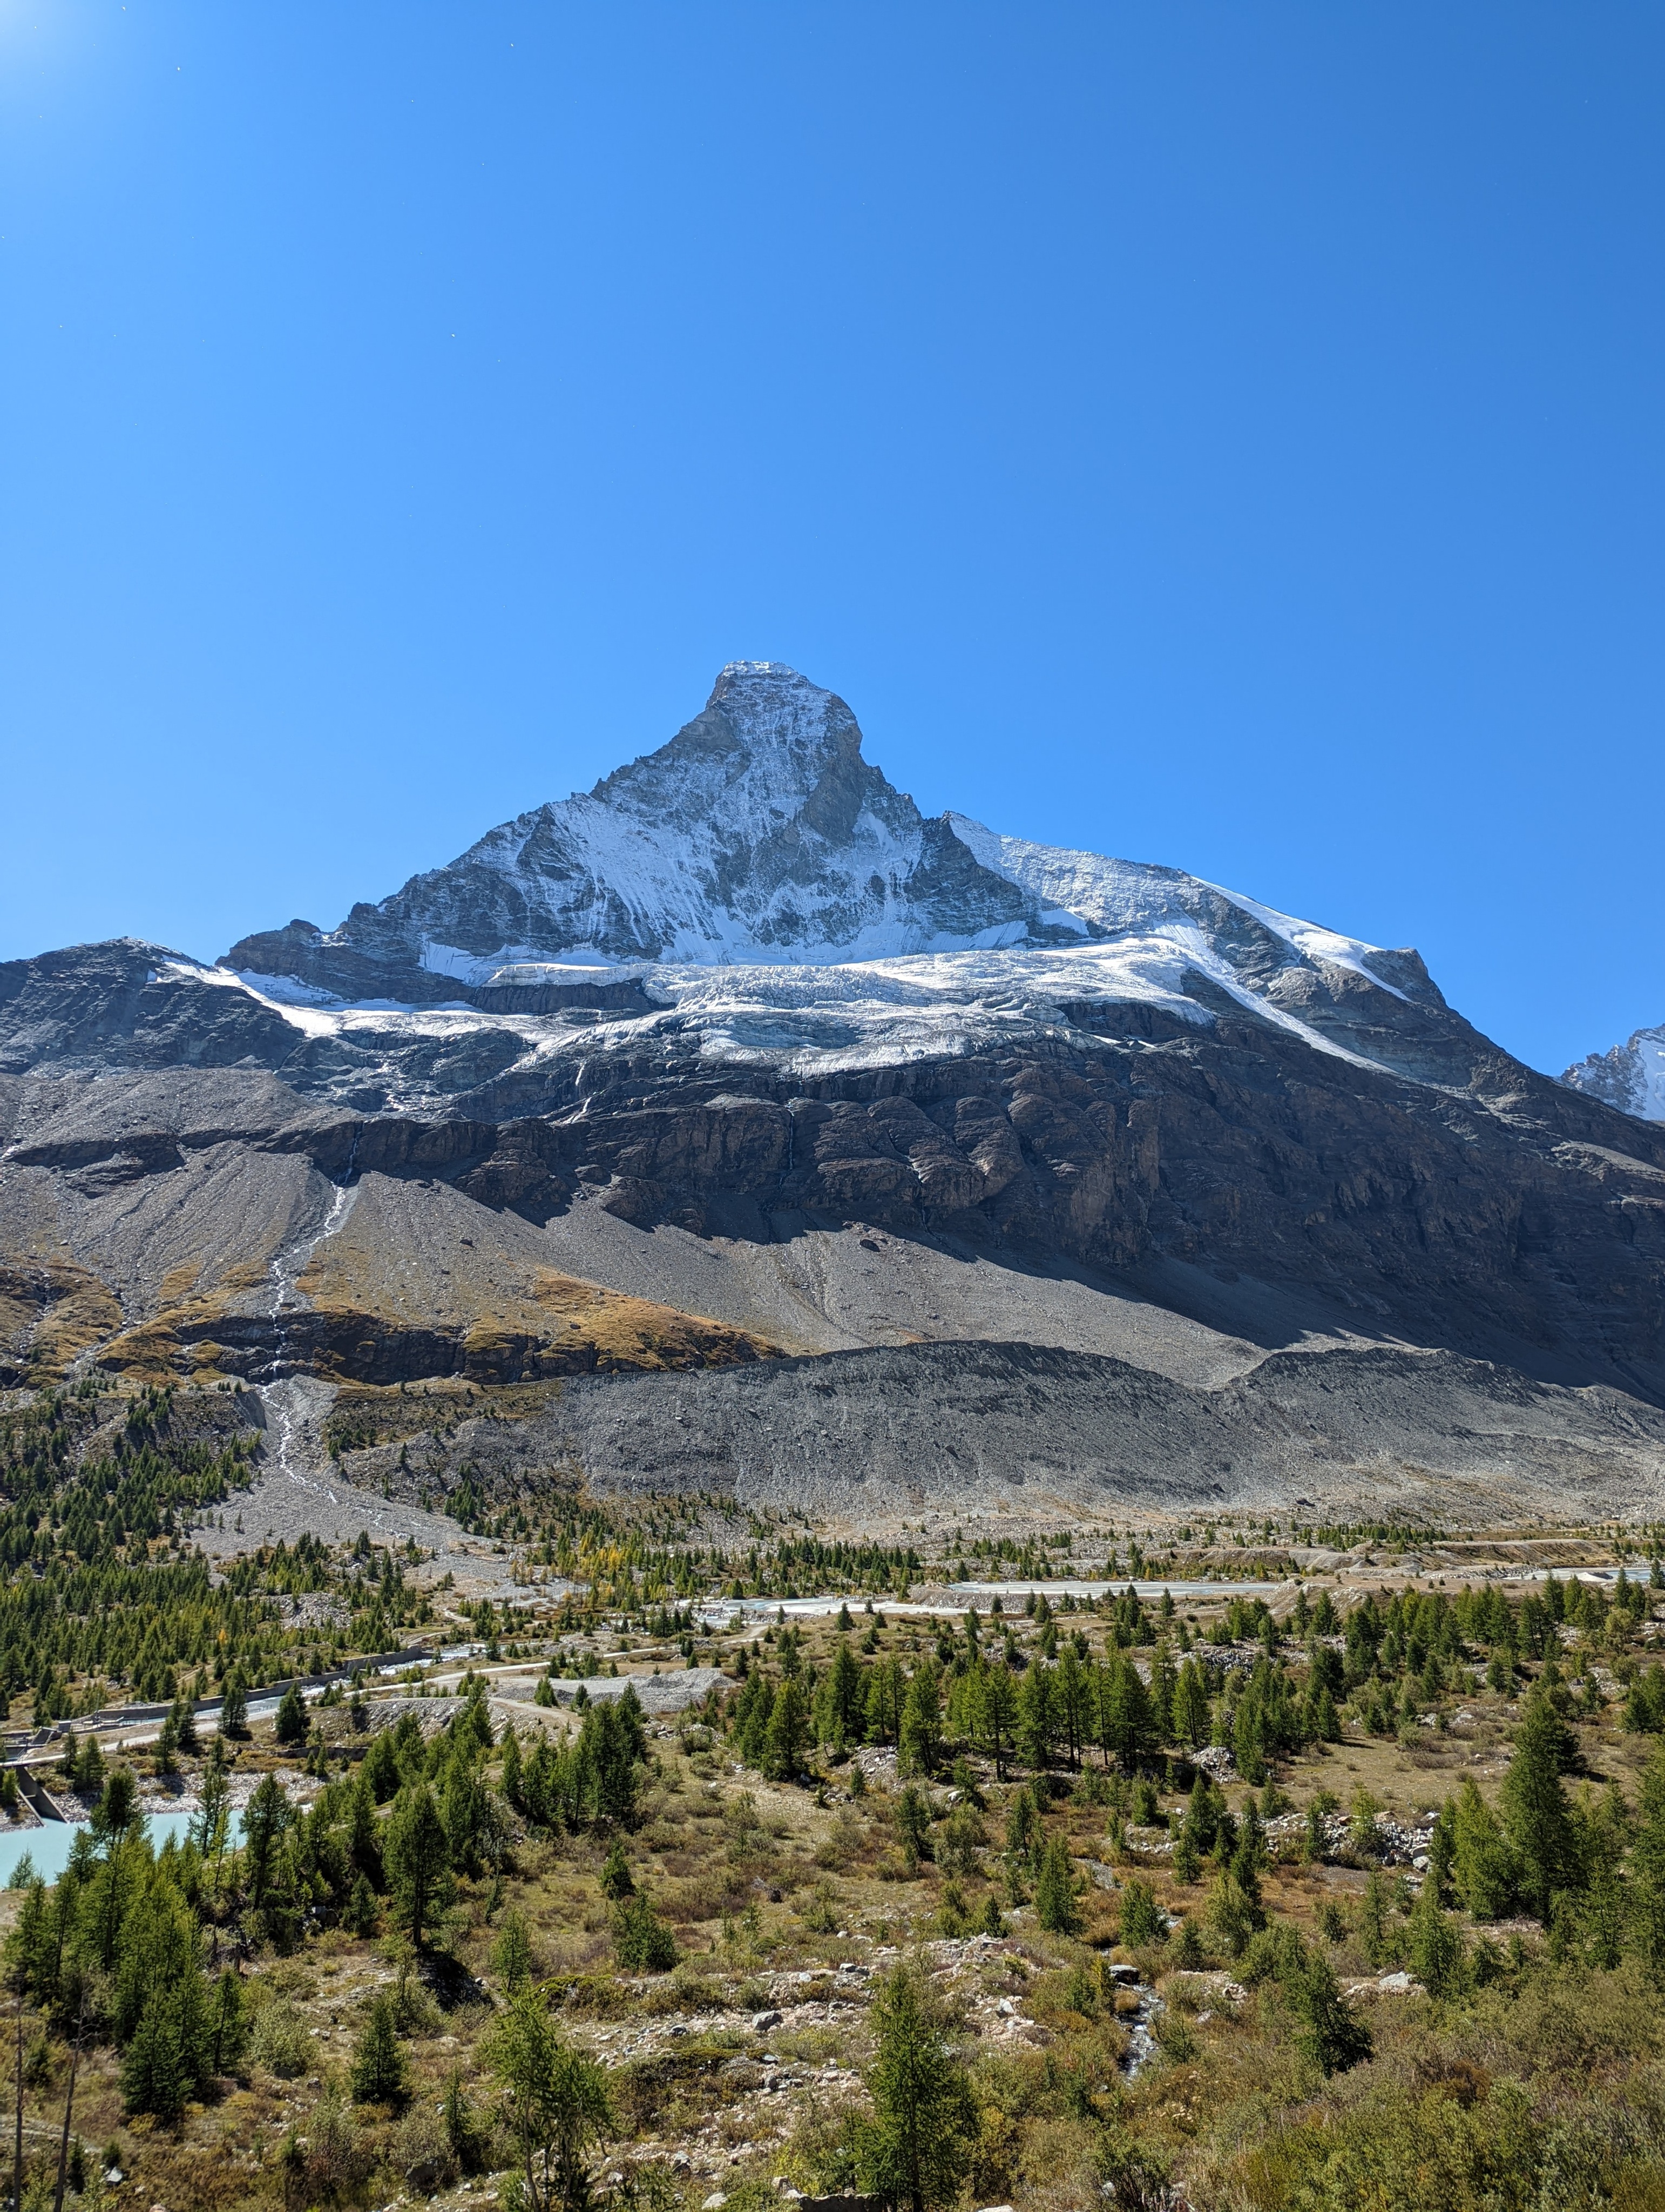 Matterhorn from below, dams in foreground